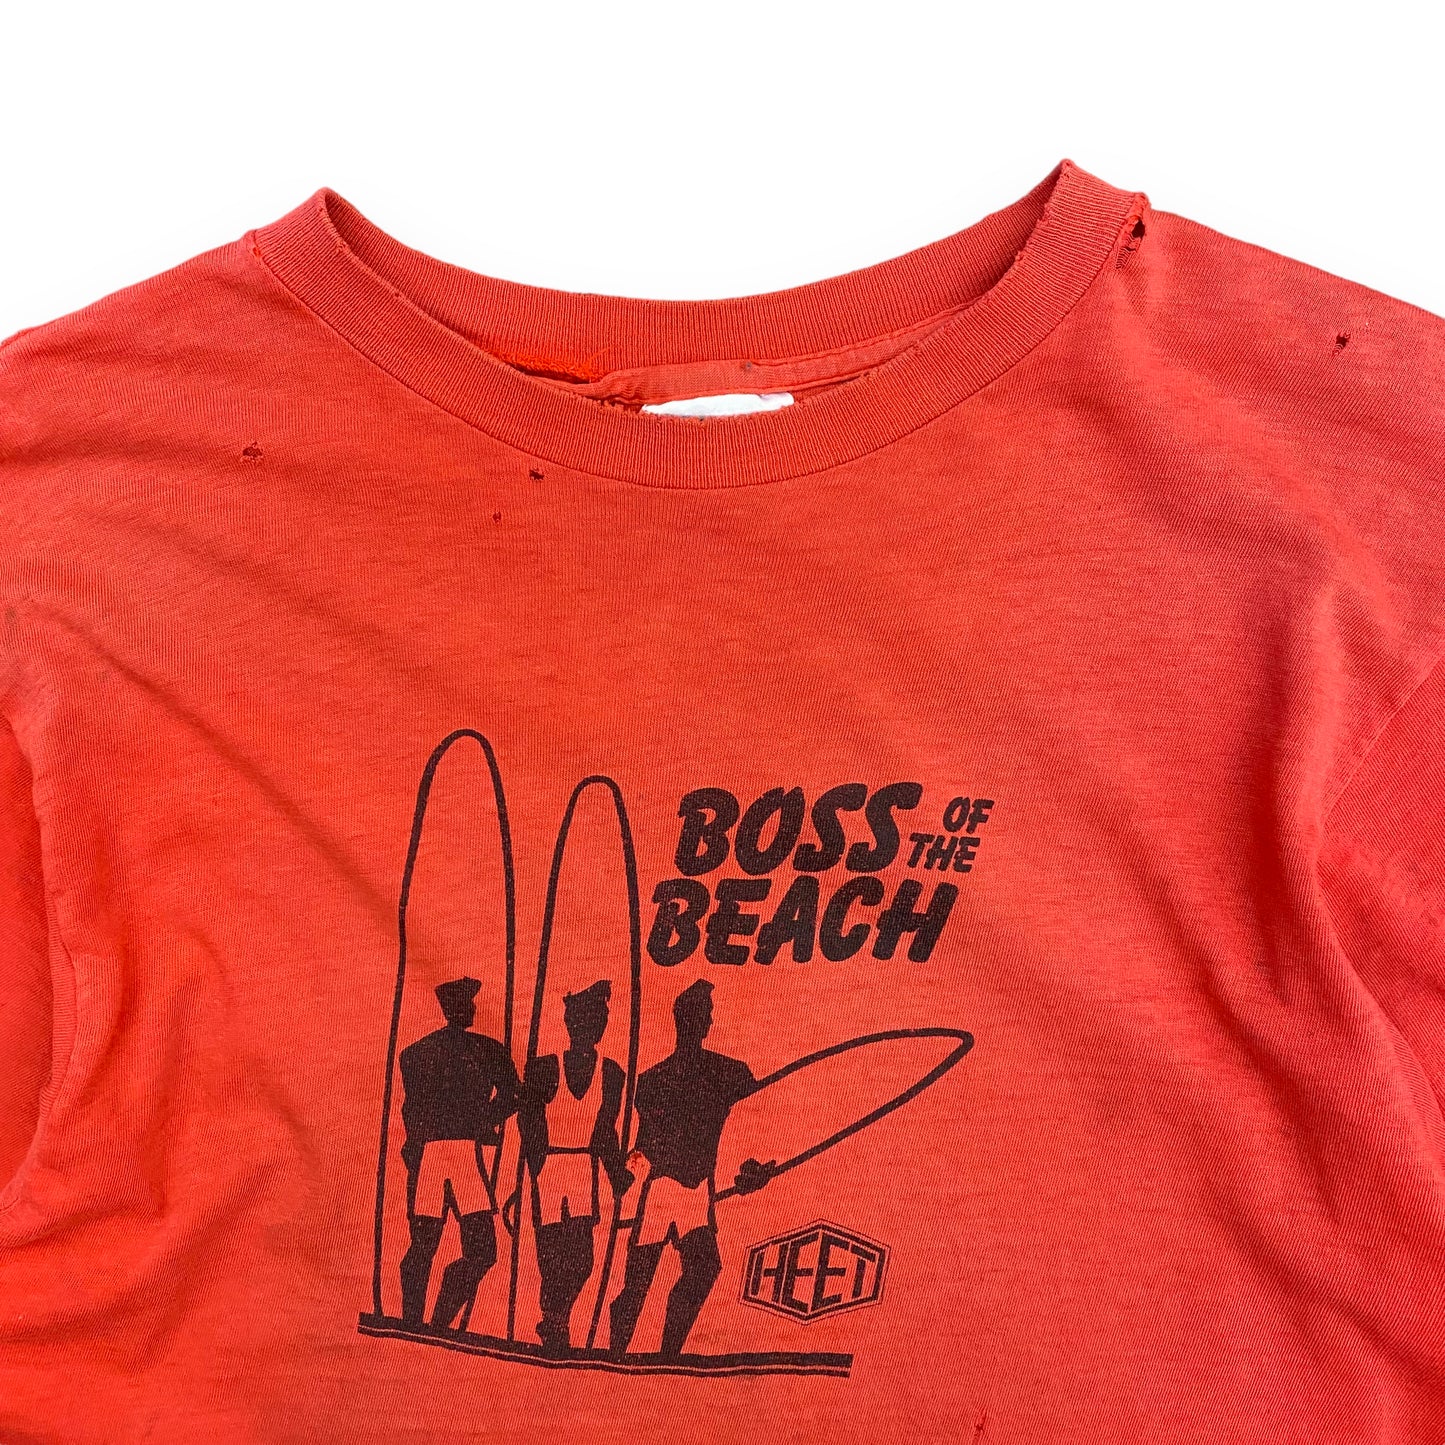 1980s HEET Surf Co. "Boss of the Beach" Tee - Size Medium